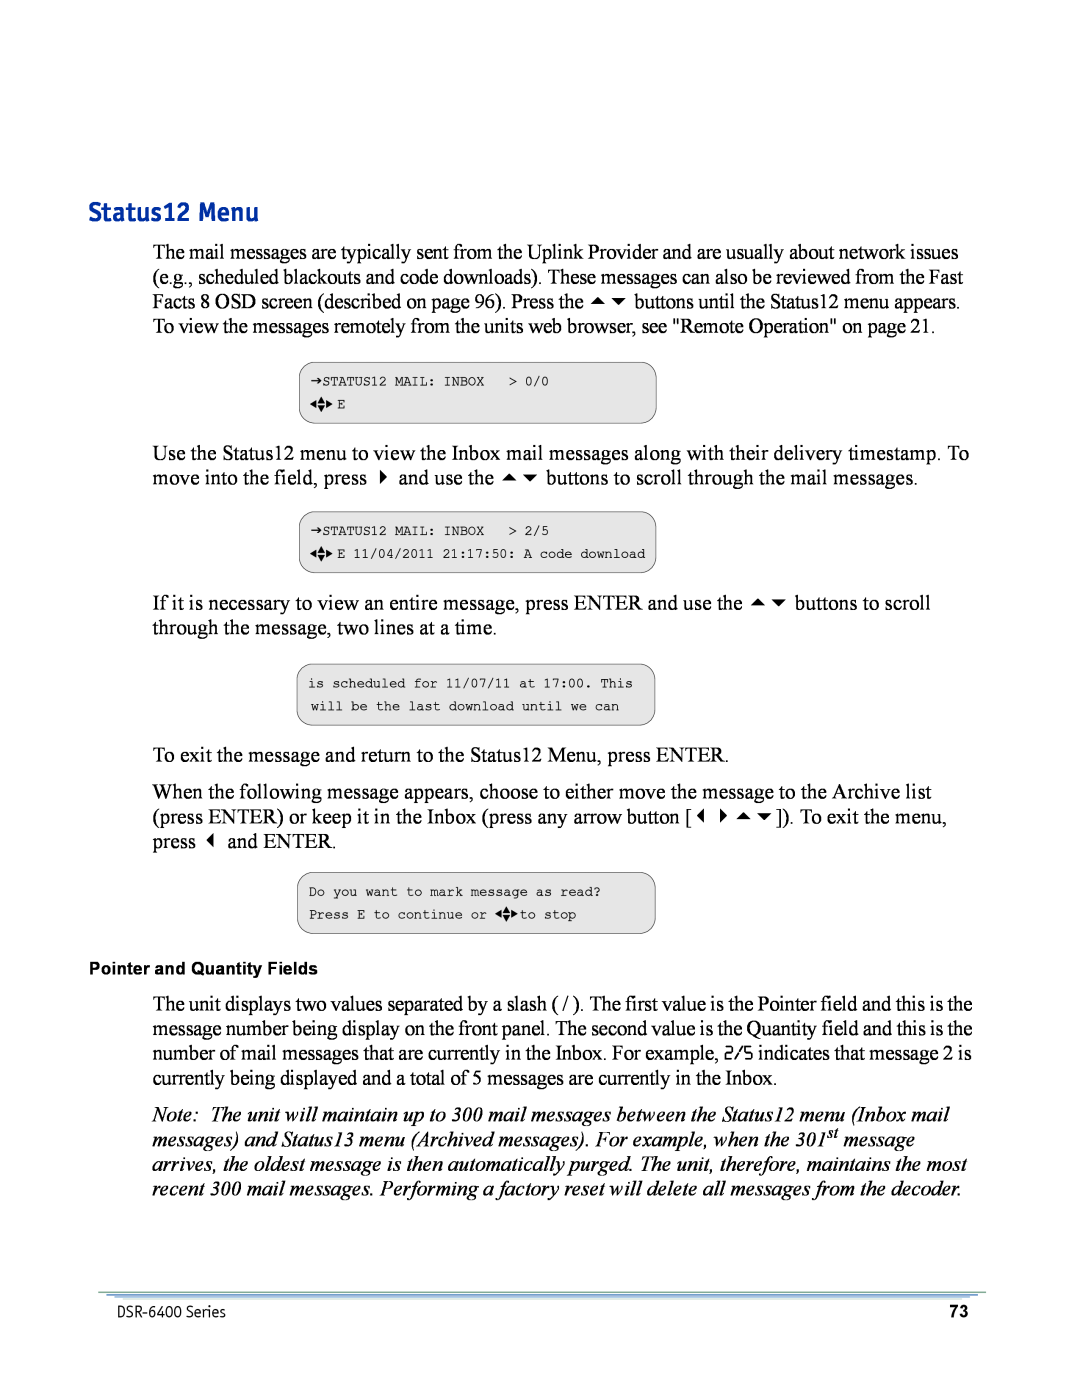 Motorola DSR-6400 manual Status12 Menu, Pointer and Quantity Fields 